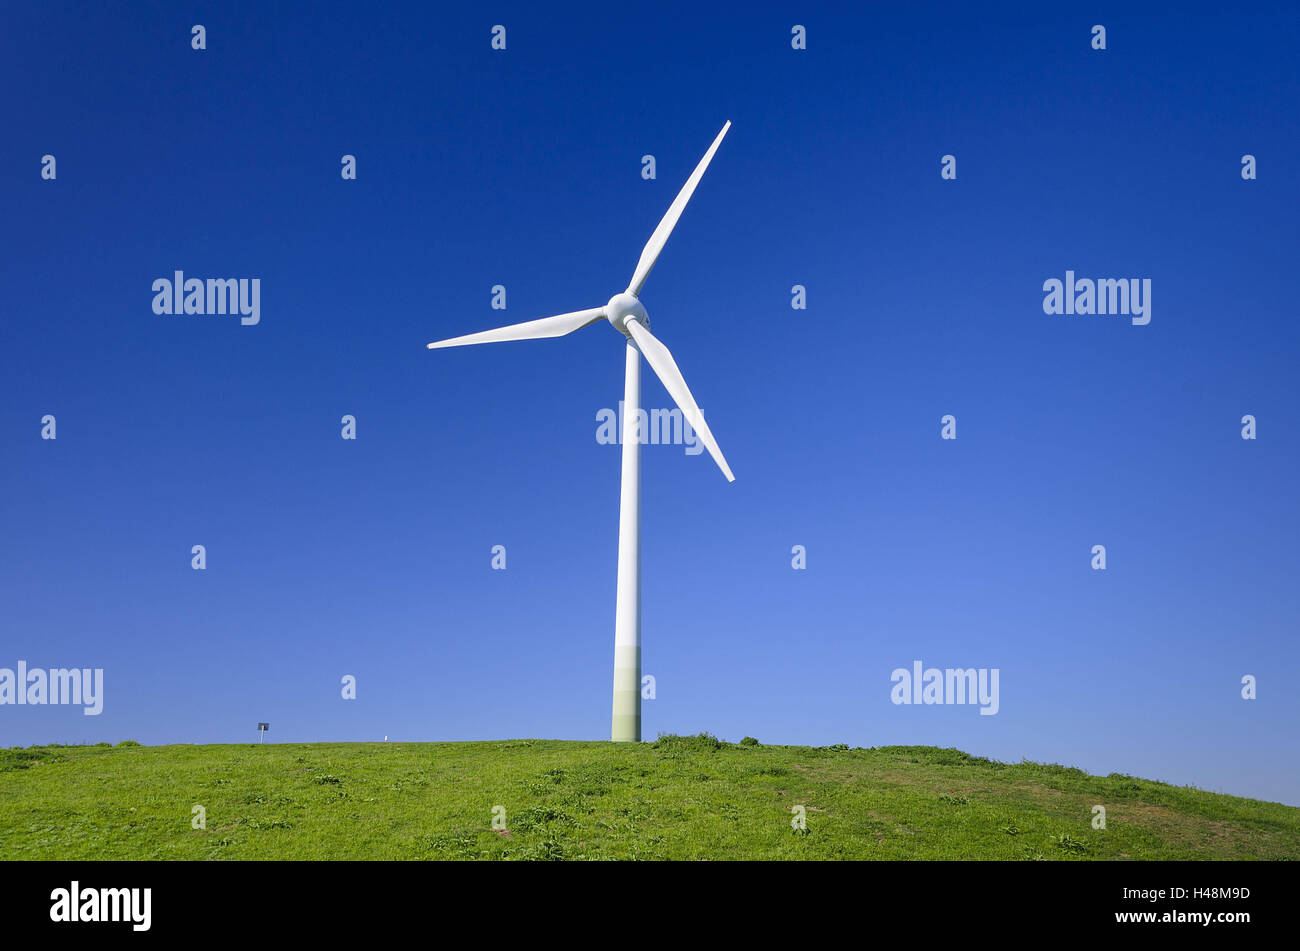 Germany, Bavaria, Upper Bavaria, Munich, Fröttmaning, Wind Turbine, Viewpoint, Summer, Sunshine, electricity, technology, wind energy, wind turbine, cloudless, green power, Stock Photo